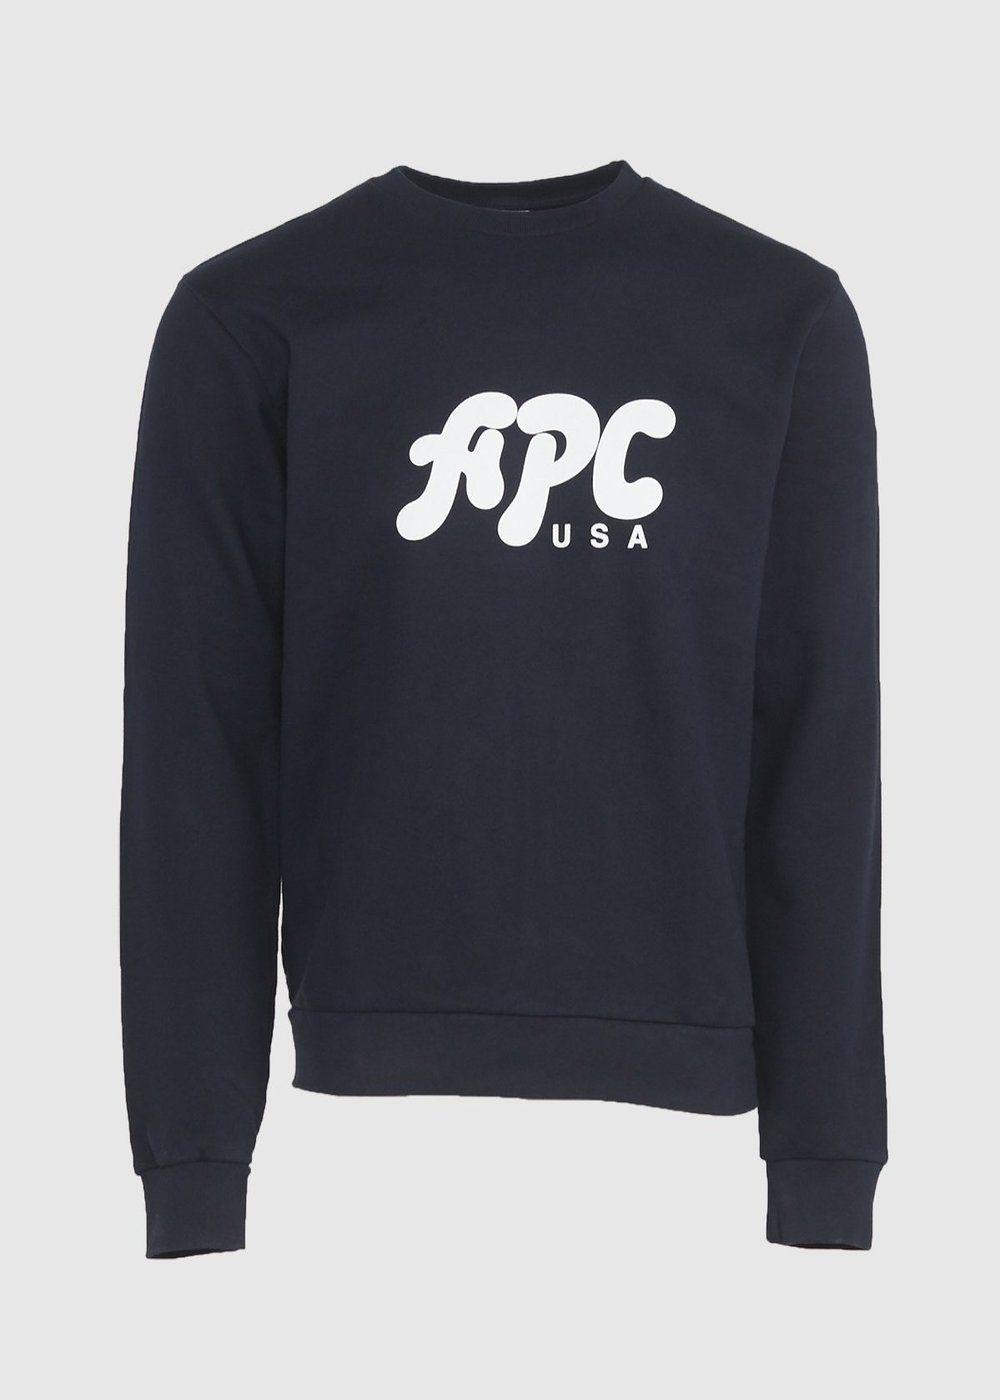 A.P.c. Logo - A.P.C: LOGO SWEATSHIRT [NAVY WHITE]